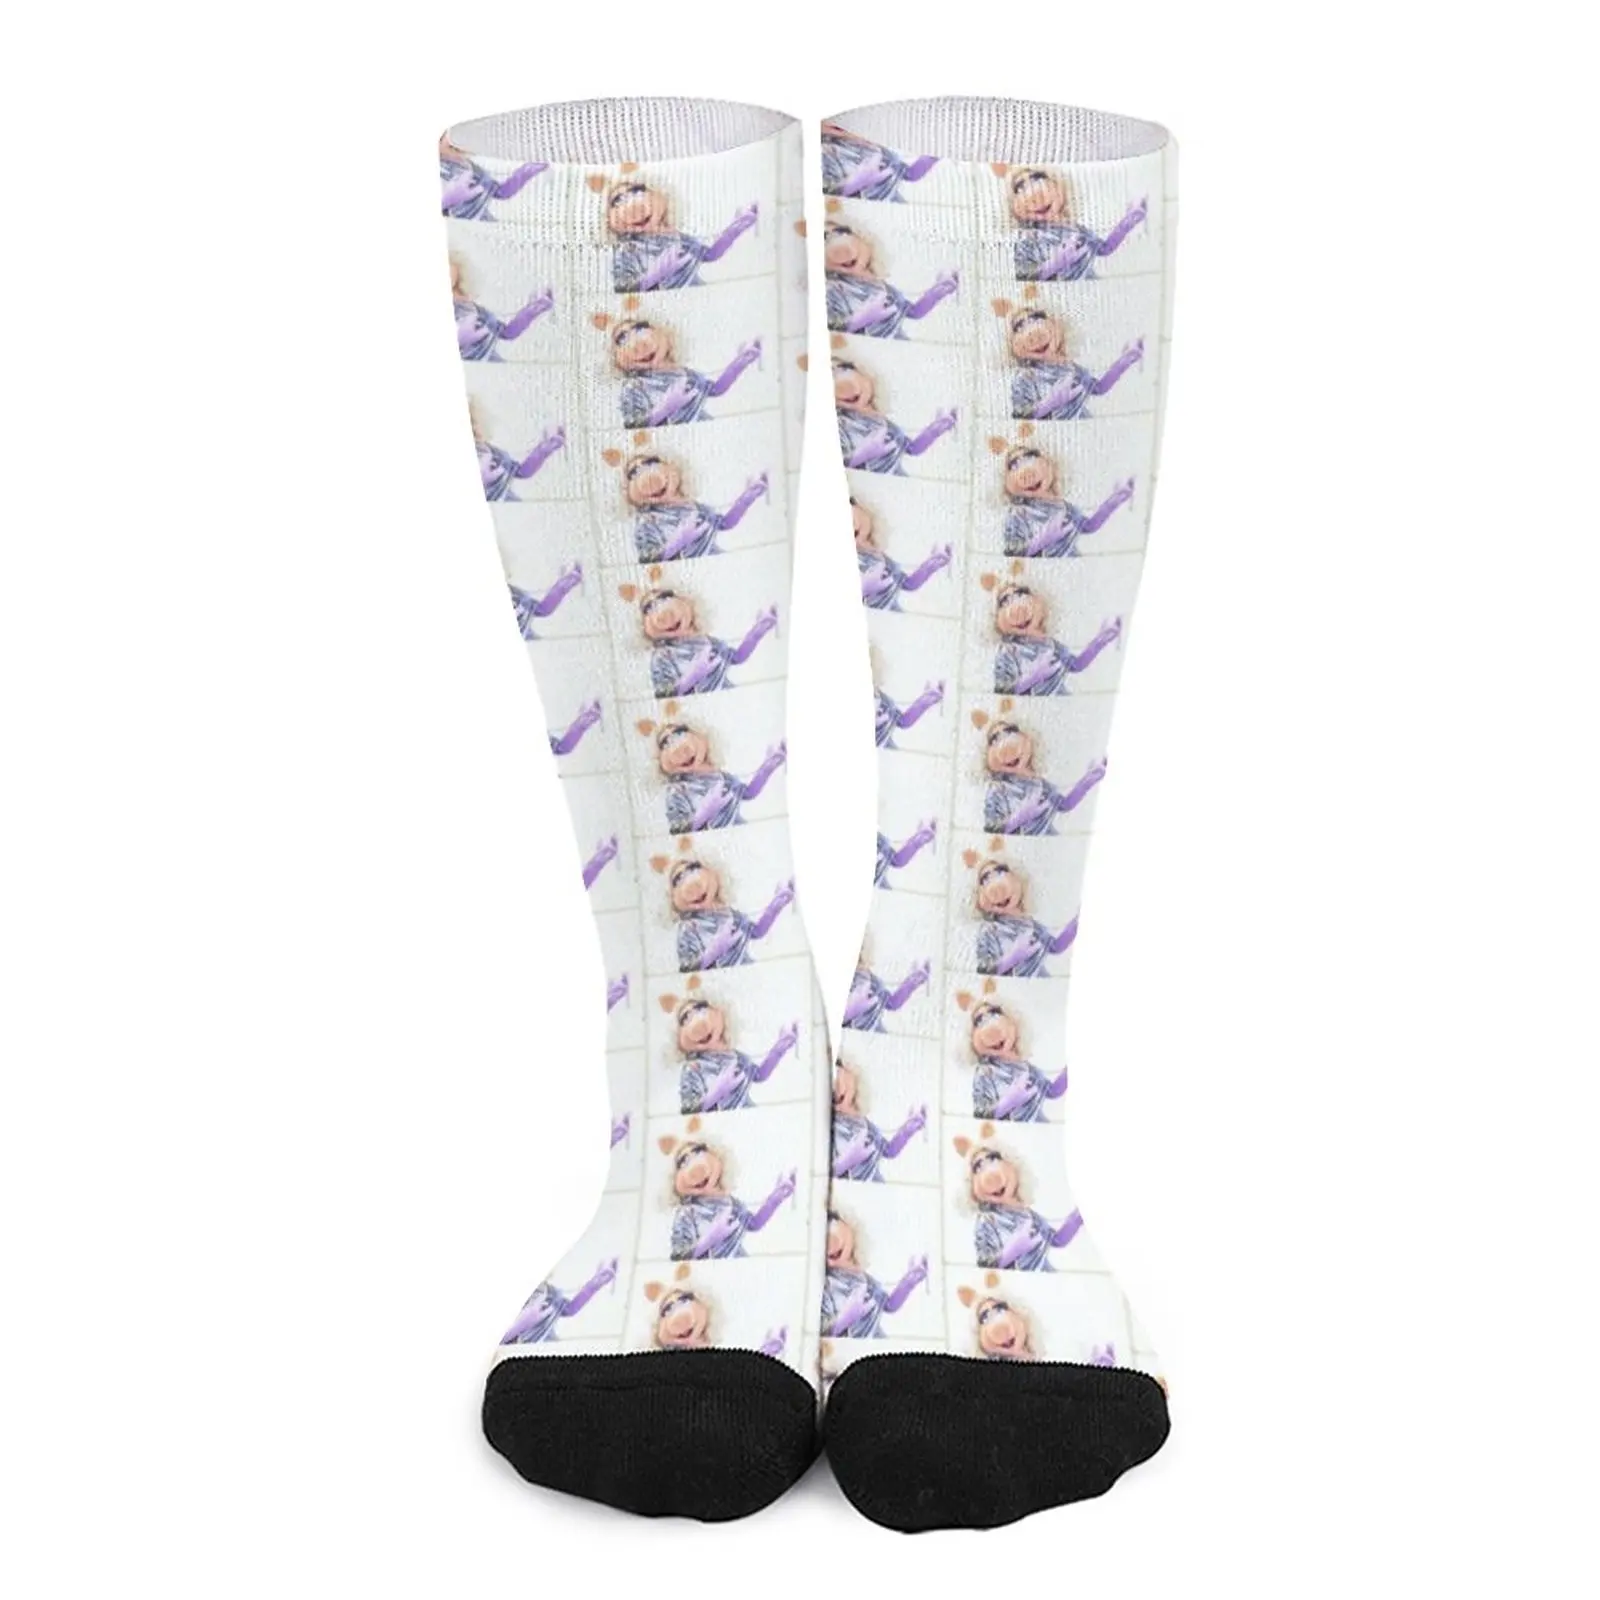 

Miss Piggy wearing foil Socks Compression stockings sports stockings man